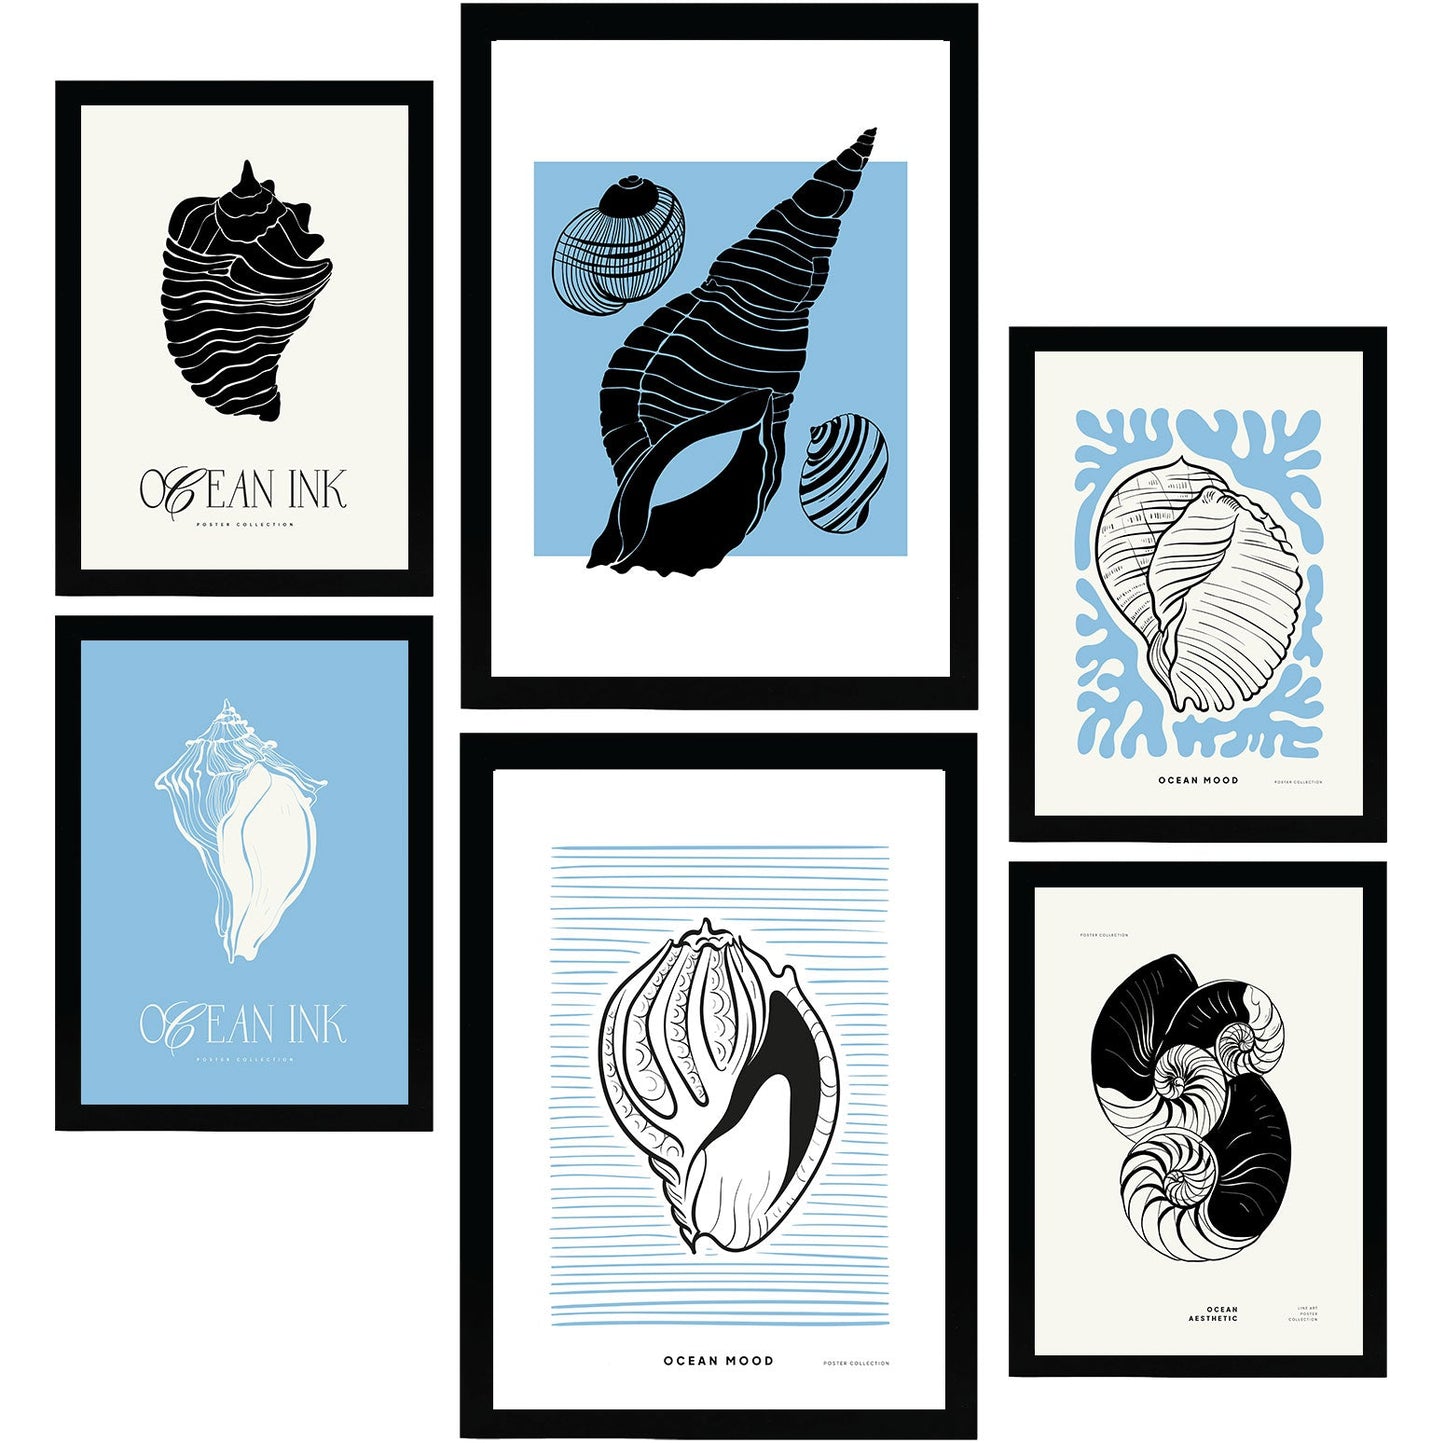 Thick Black Ink Posters. Sea Snail Shells. Artistic Marine Aesthetic-Artwork-Nacnic-Nacnic Estudio SL